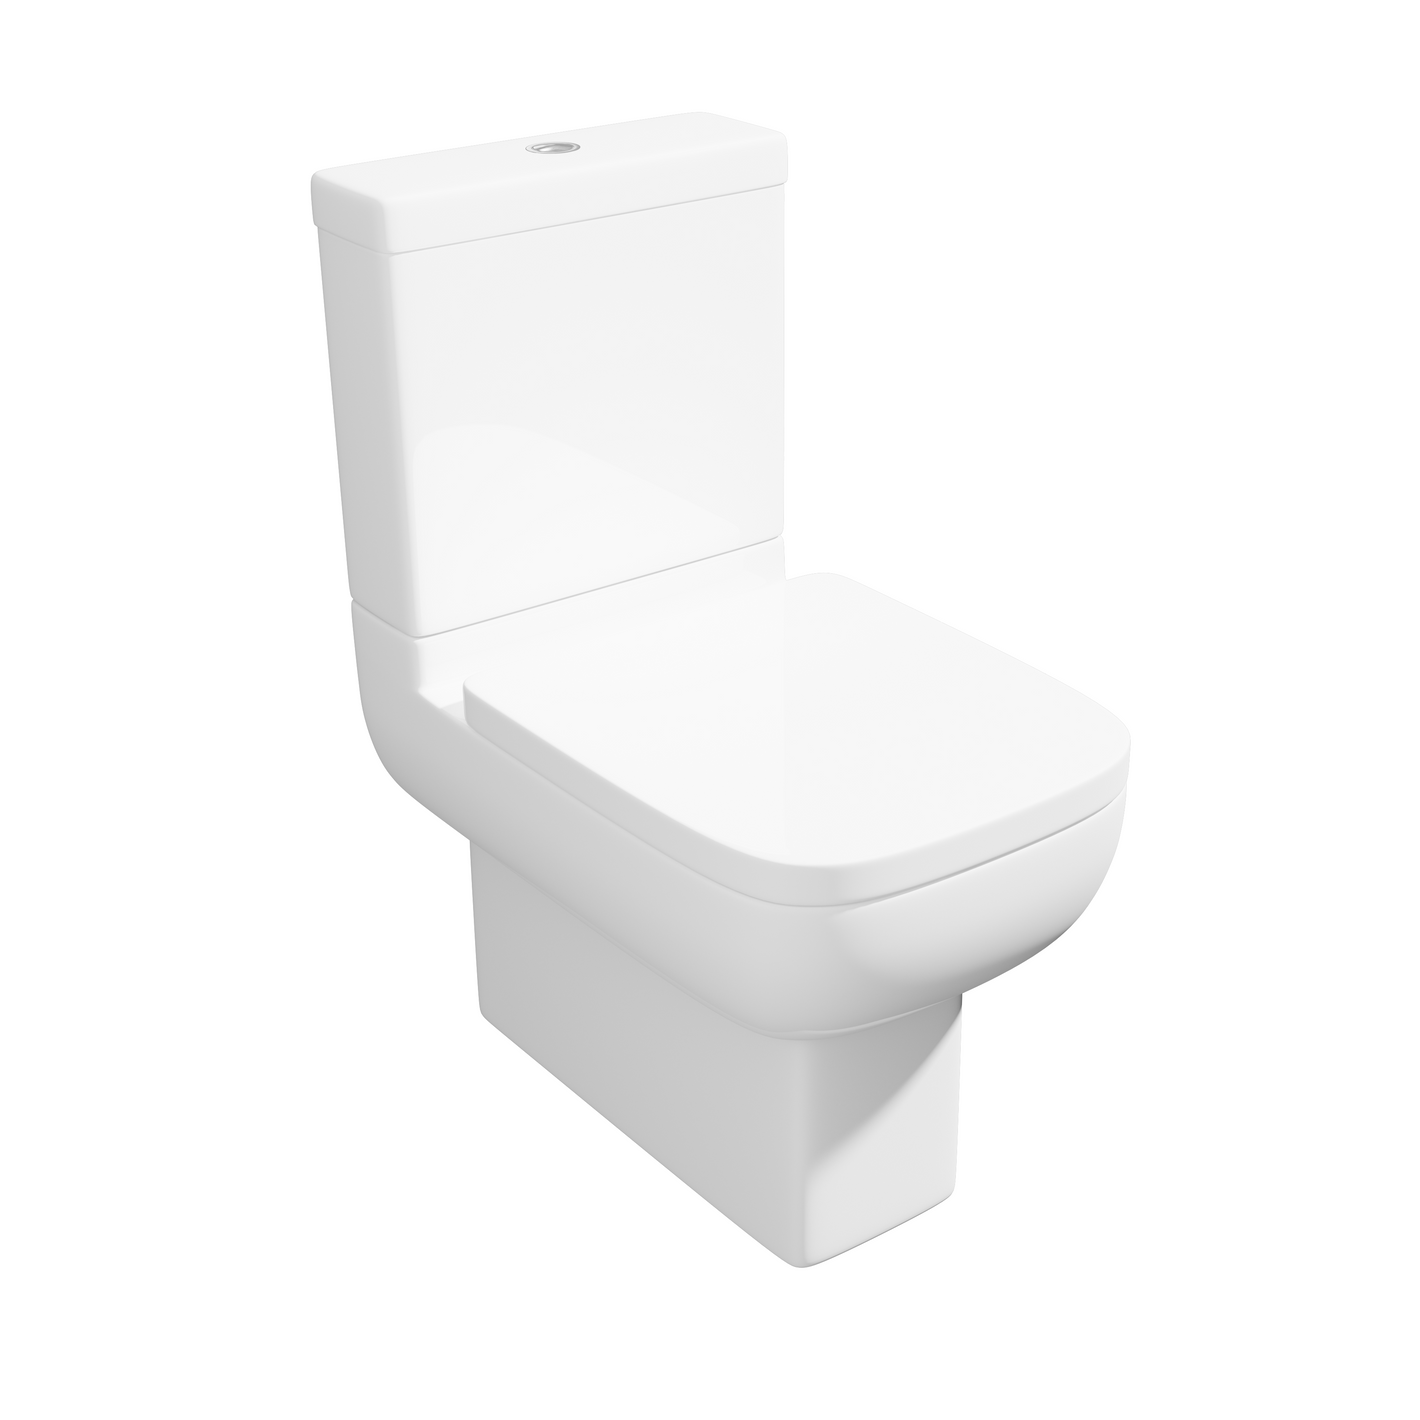 Options 600 Close to Wall C/C Toilet - Options 600 - Bliss Bathroom Supplies Ltd -